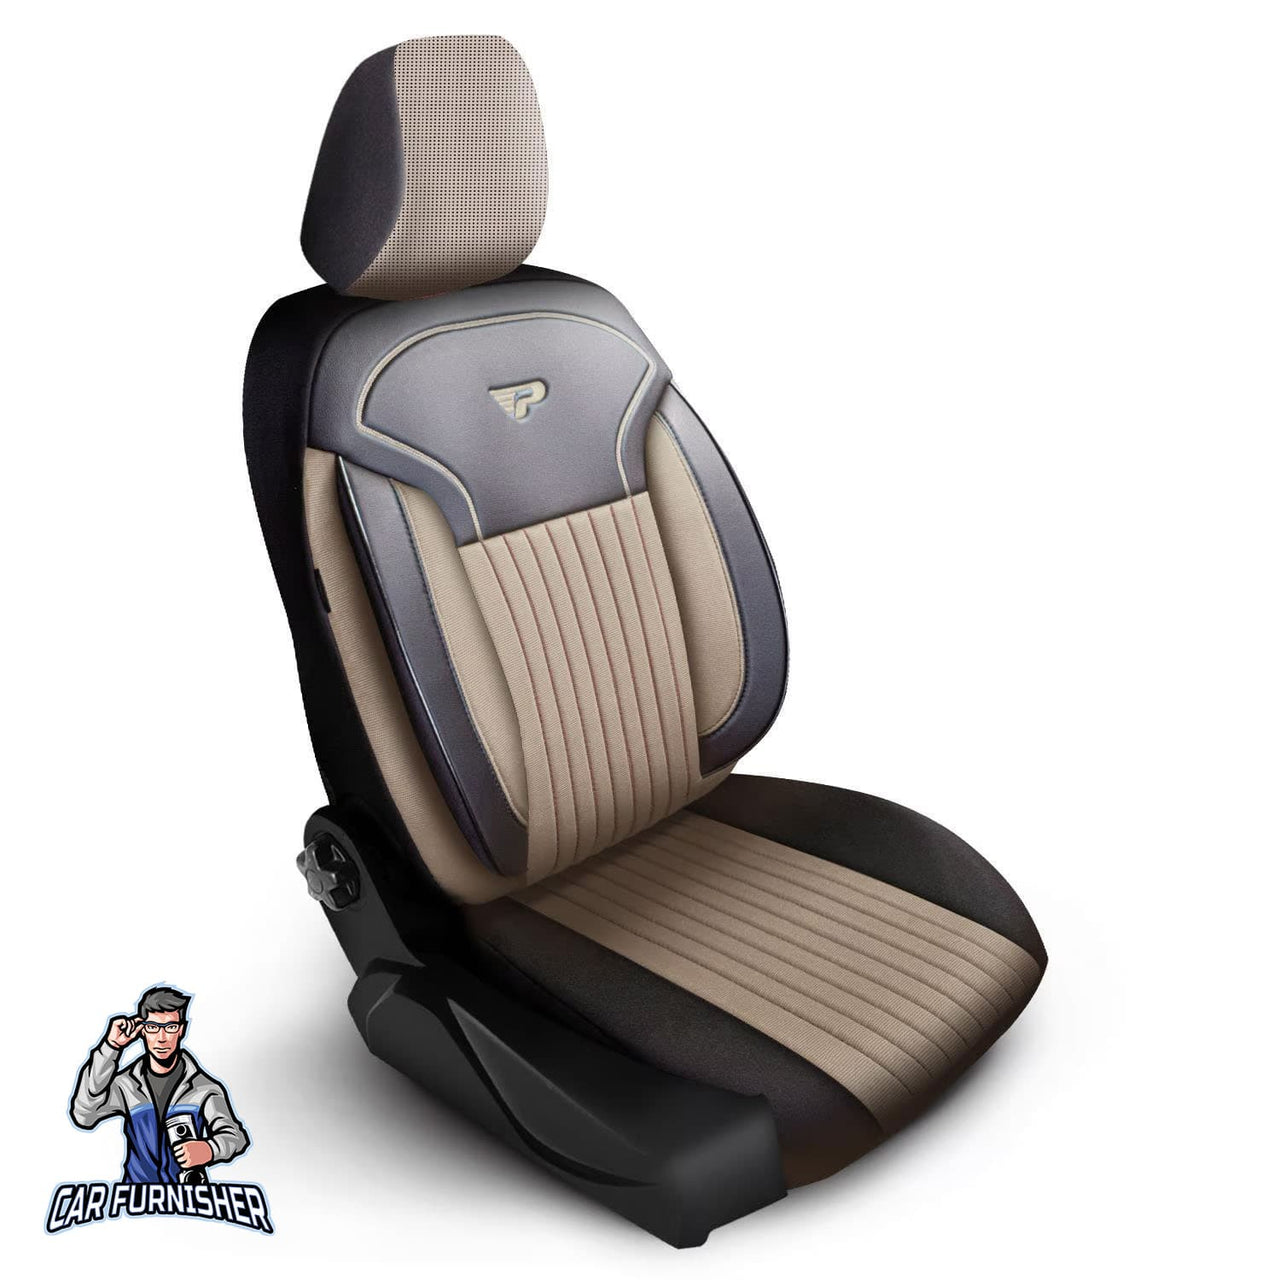 Car Seat Cover Set - Prague Design Beige 5 Seats + Headrests (Full Set) Leather & Pique Fabric